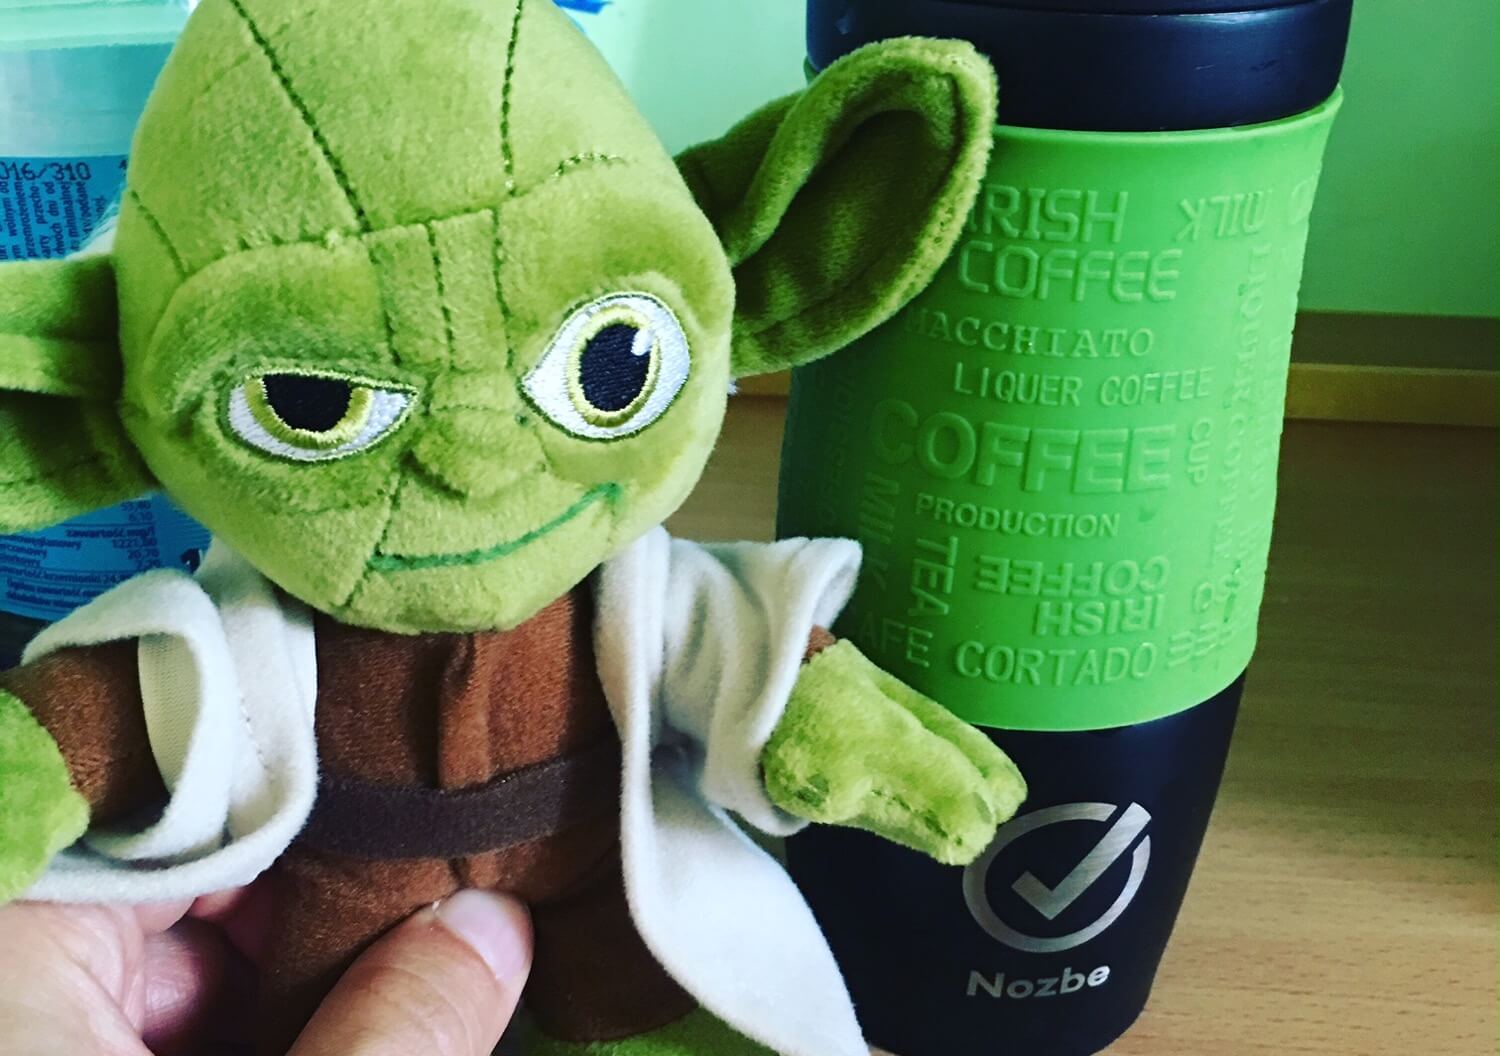 Yoda helping us work less but better